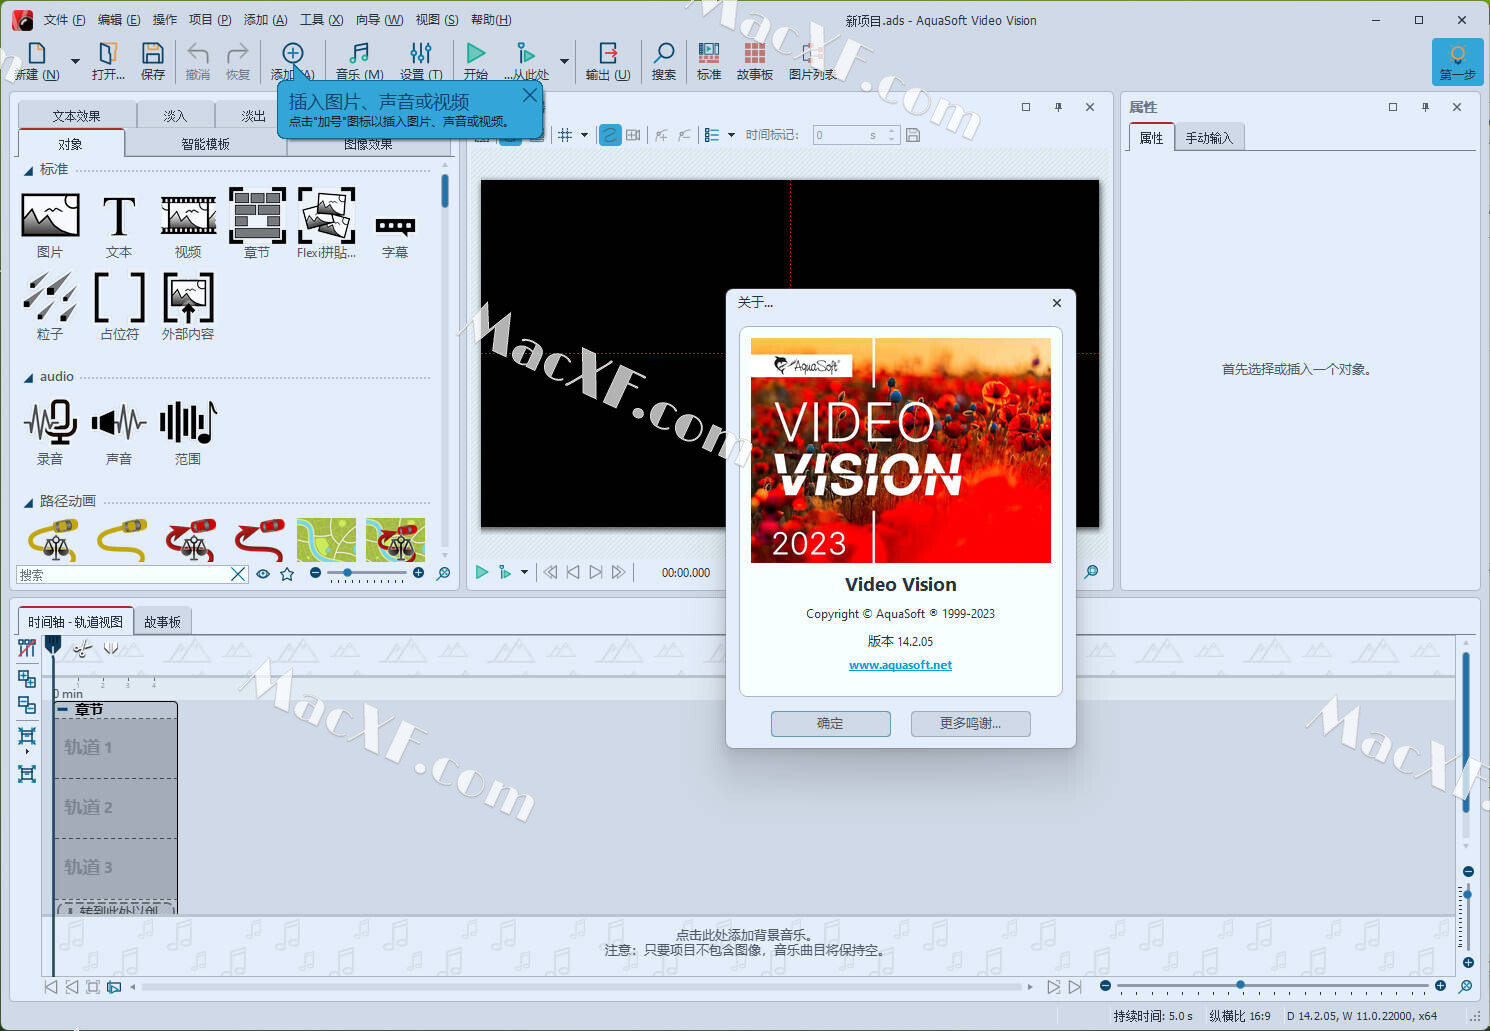 instal the new for mac AquaSoft Video Vision 14.2.09